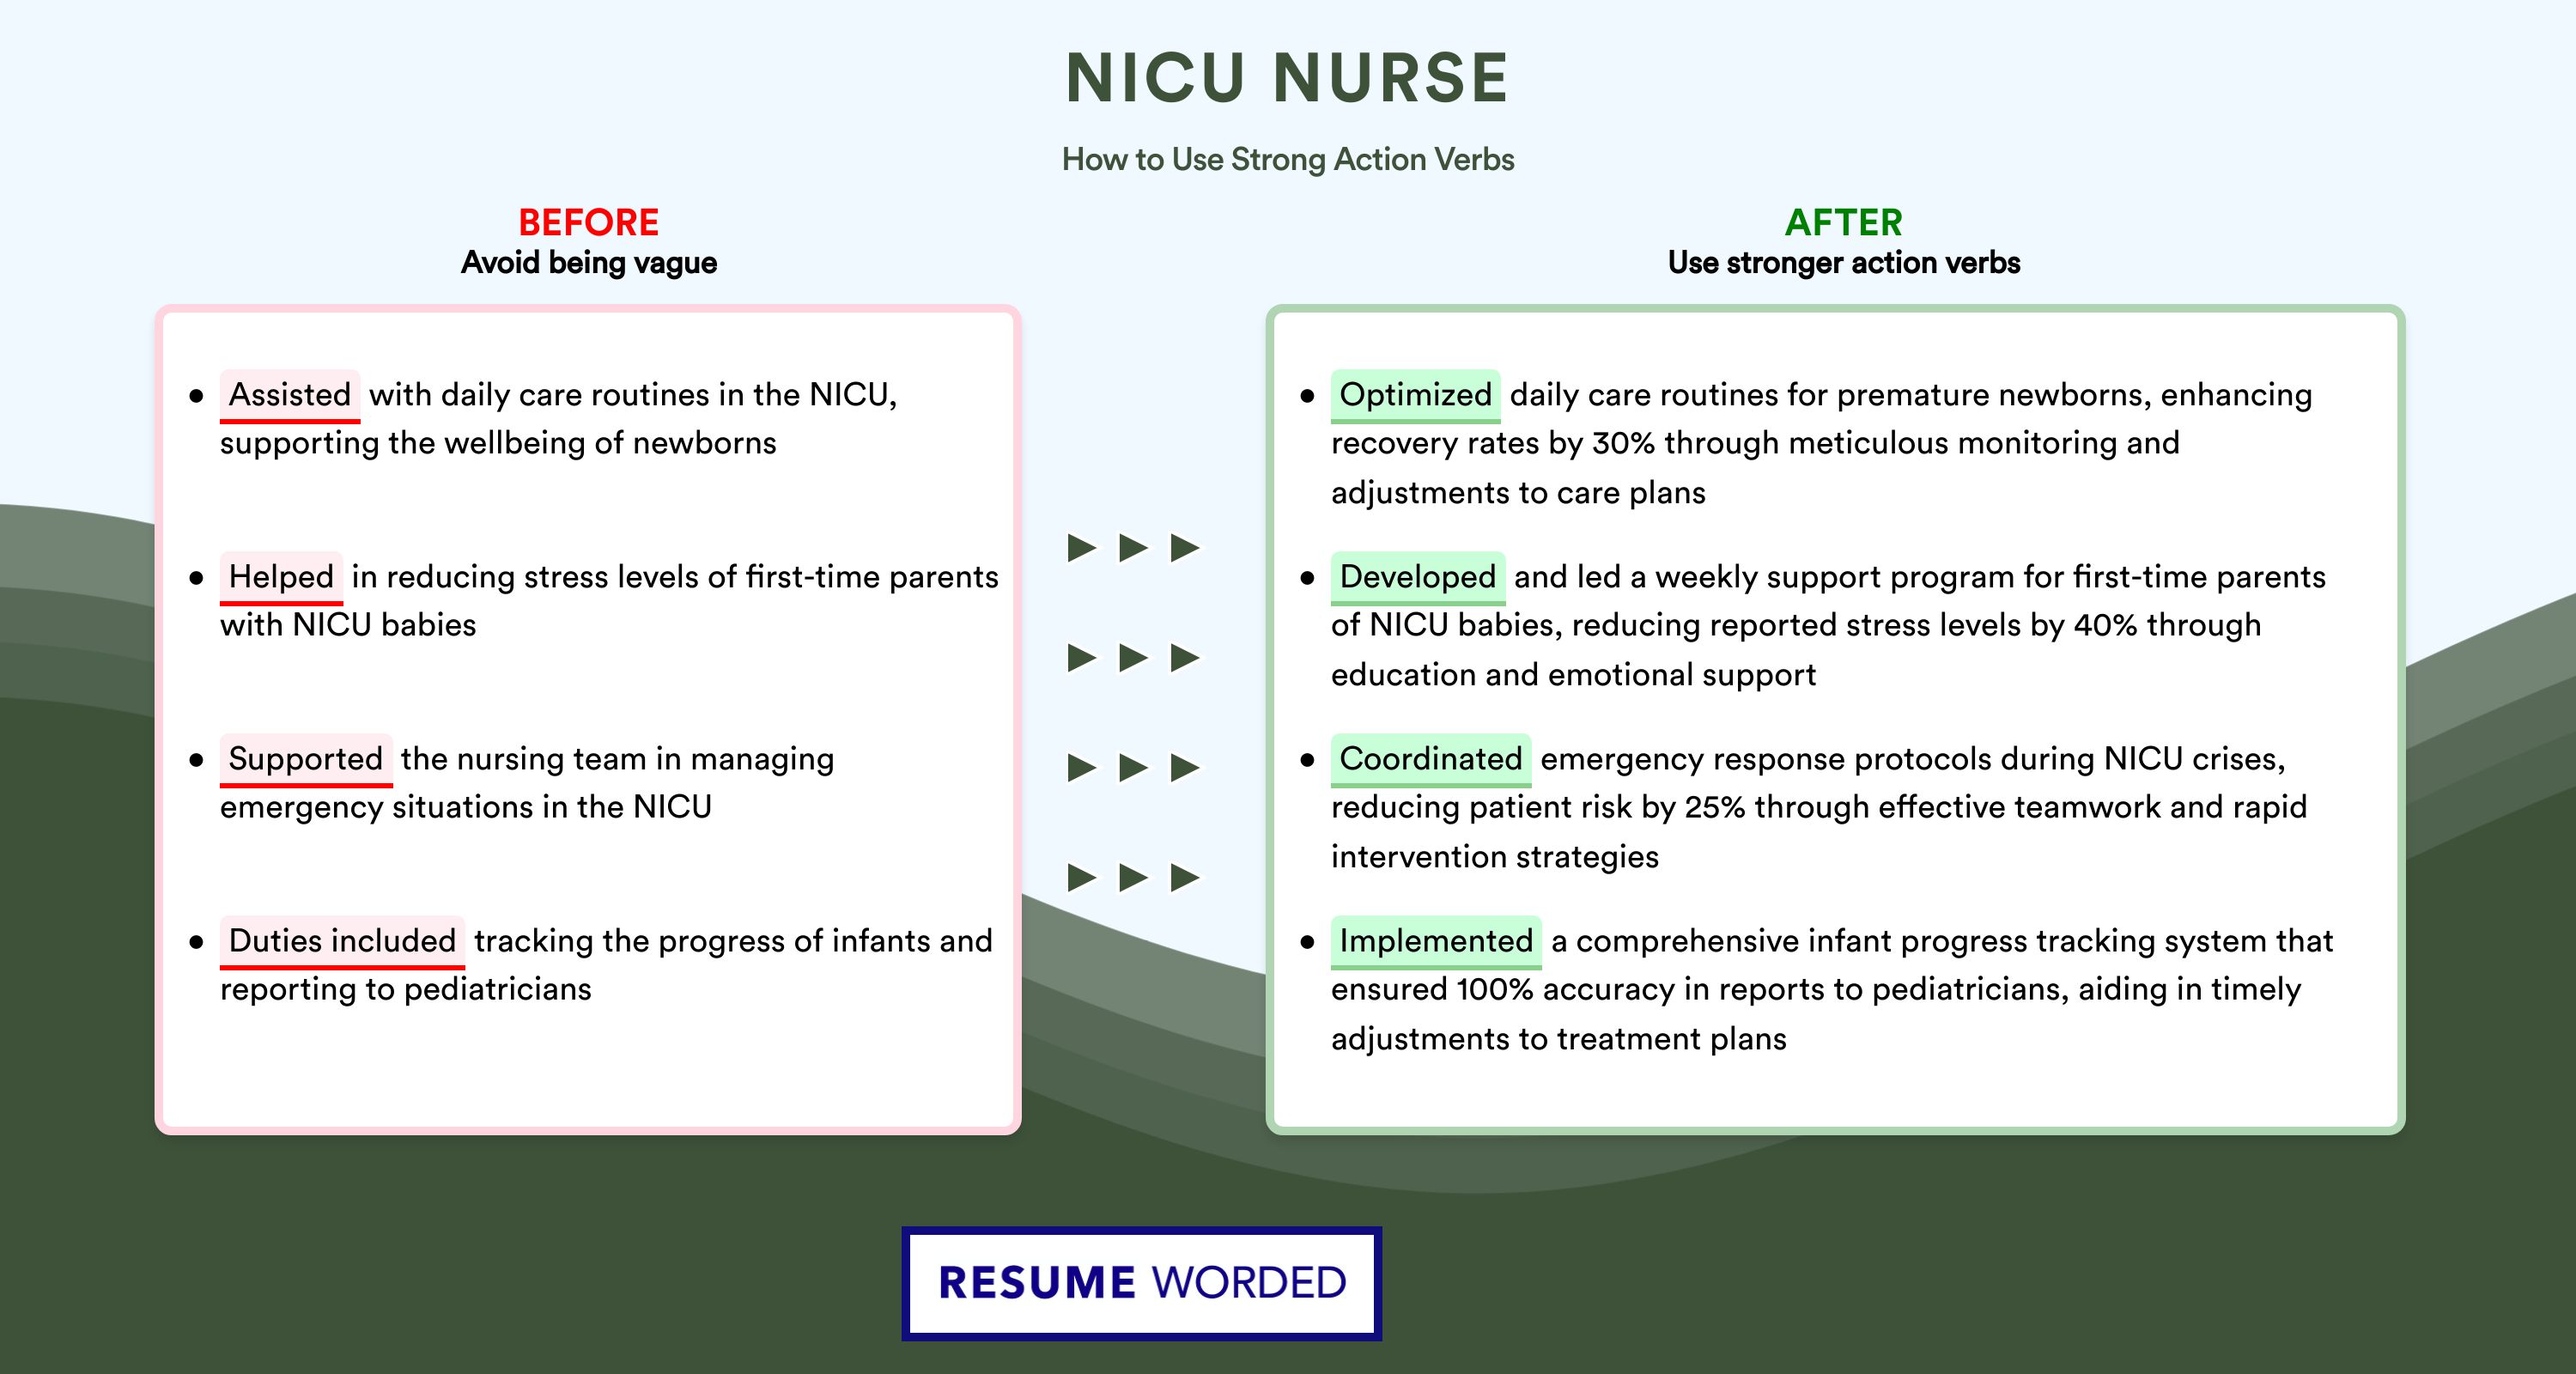 Action Verbs for NICU Nurse